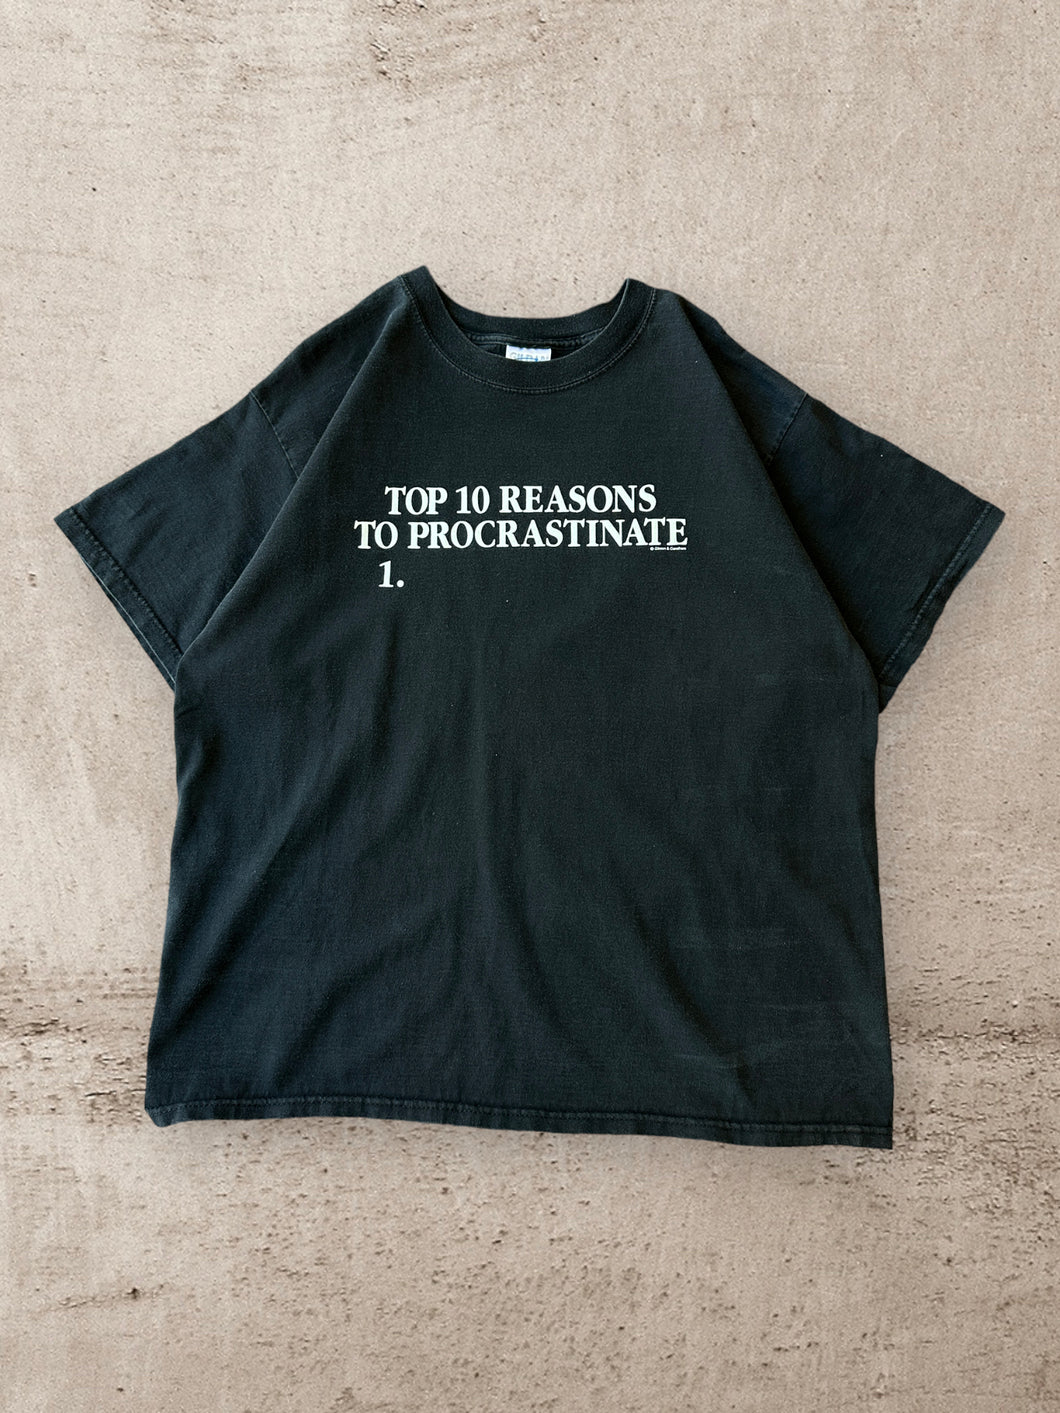 90s Reasons To Procrastinate T-Shirt - XL